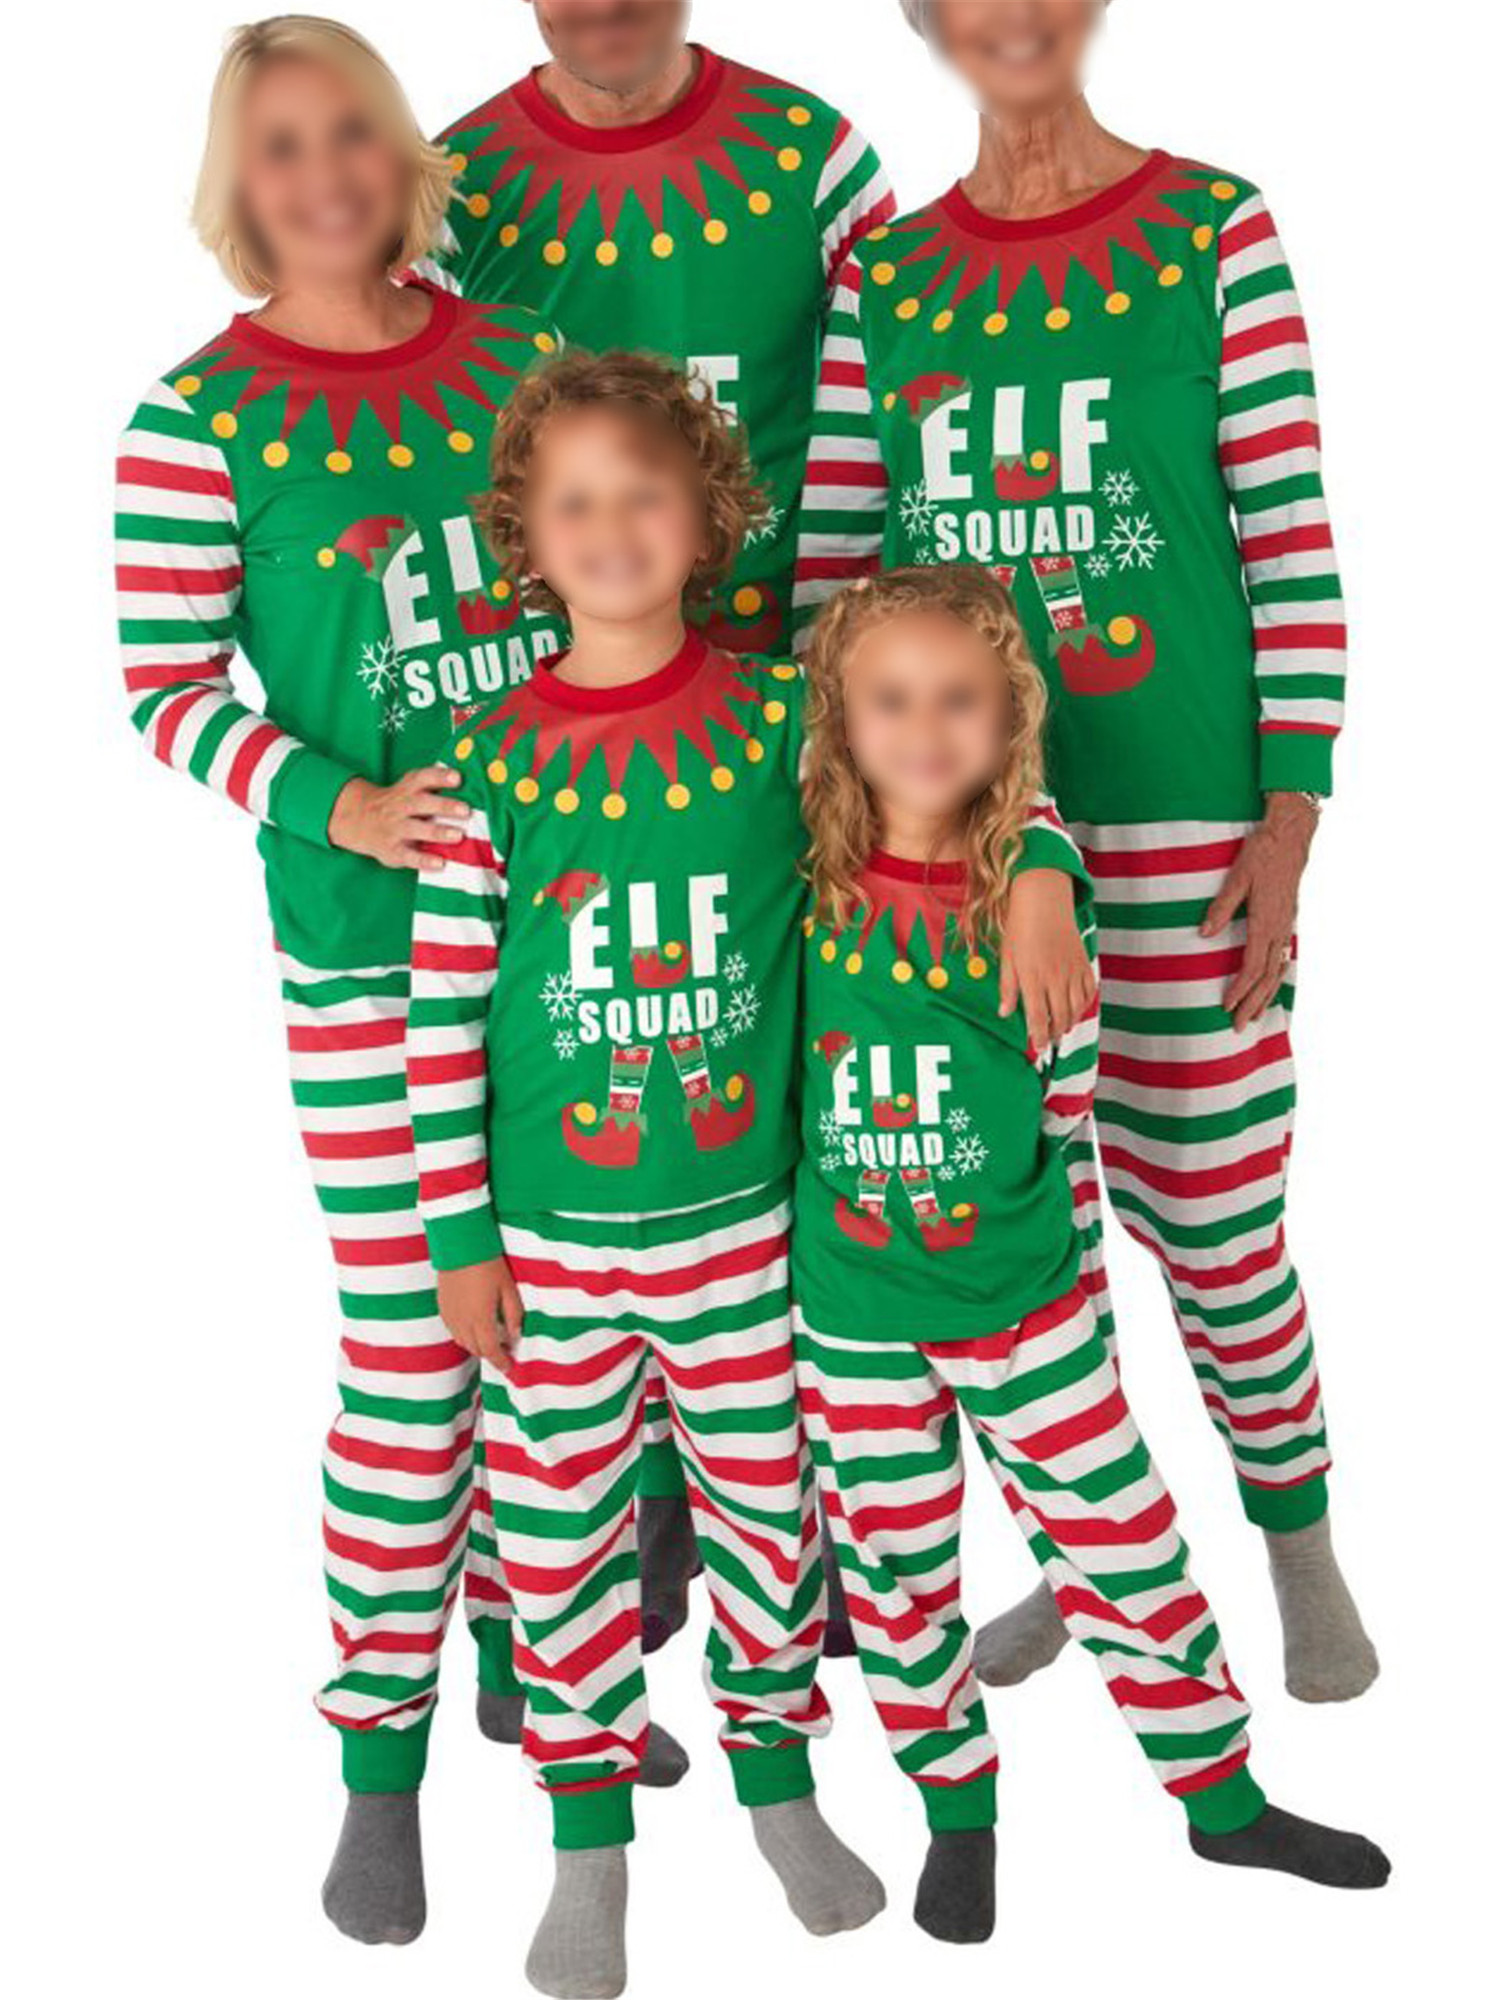 Aunavey Matching Family Christmas Pajamas Sets Holiday PJ's with ELF Printing Loungewear Sleepwear - image 4 of 6